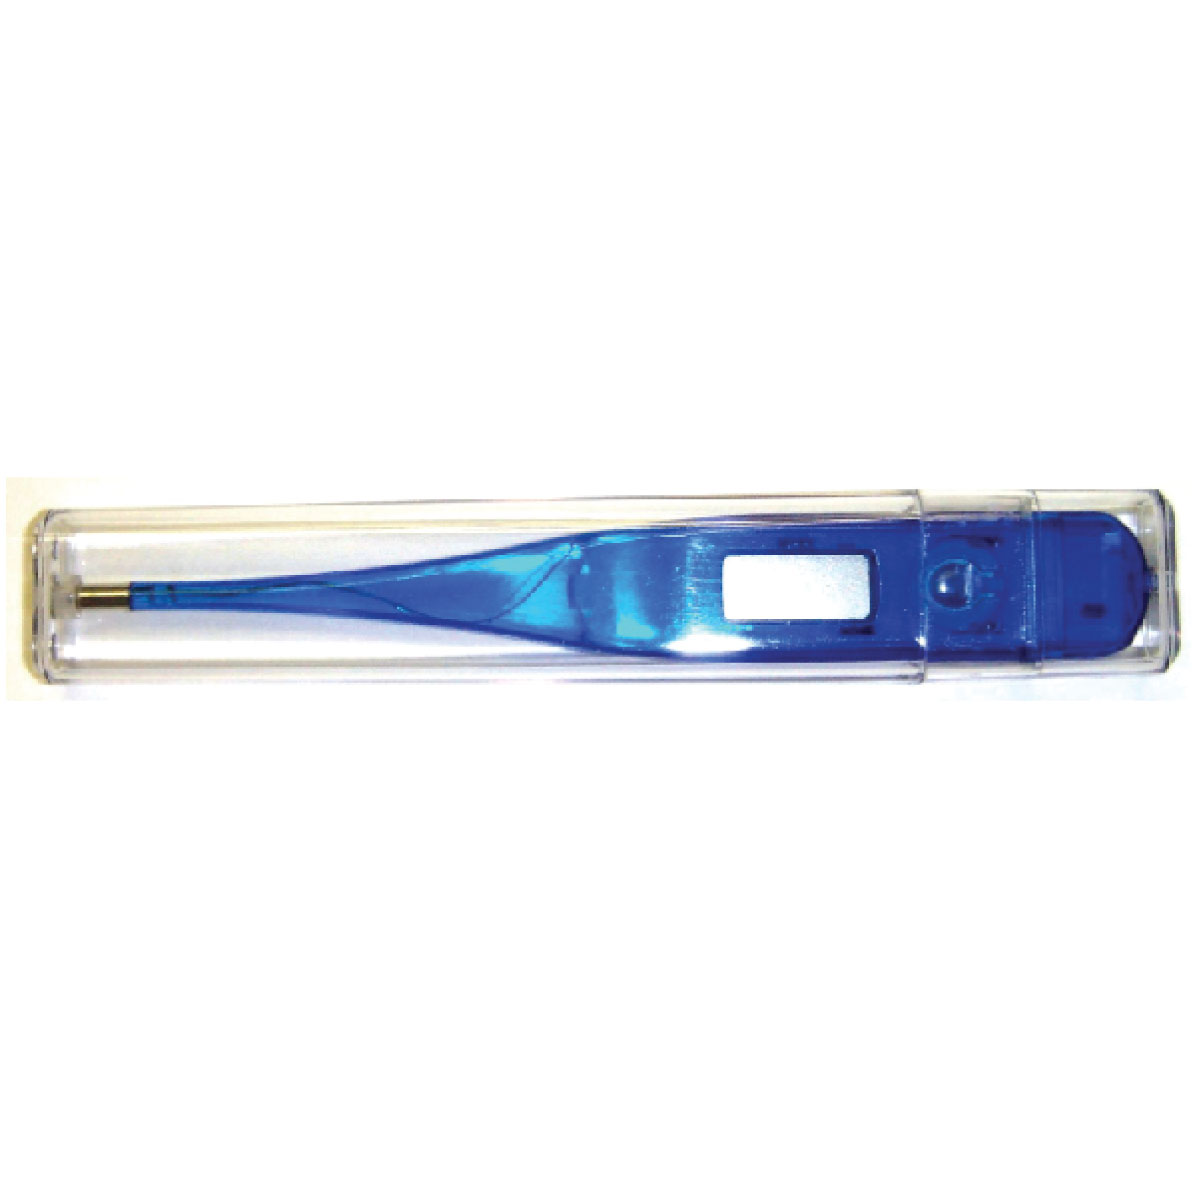 Translucent Blue Digital Thermometer